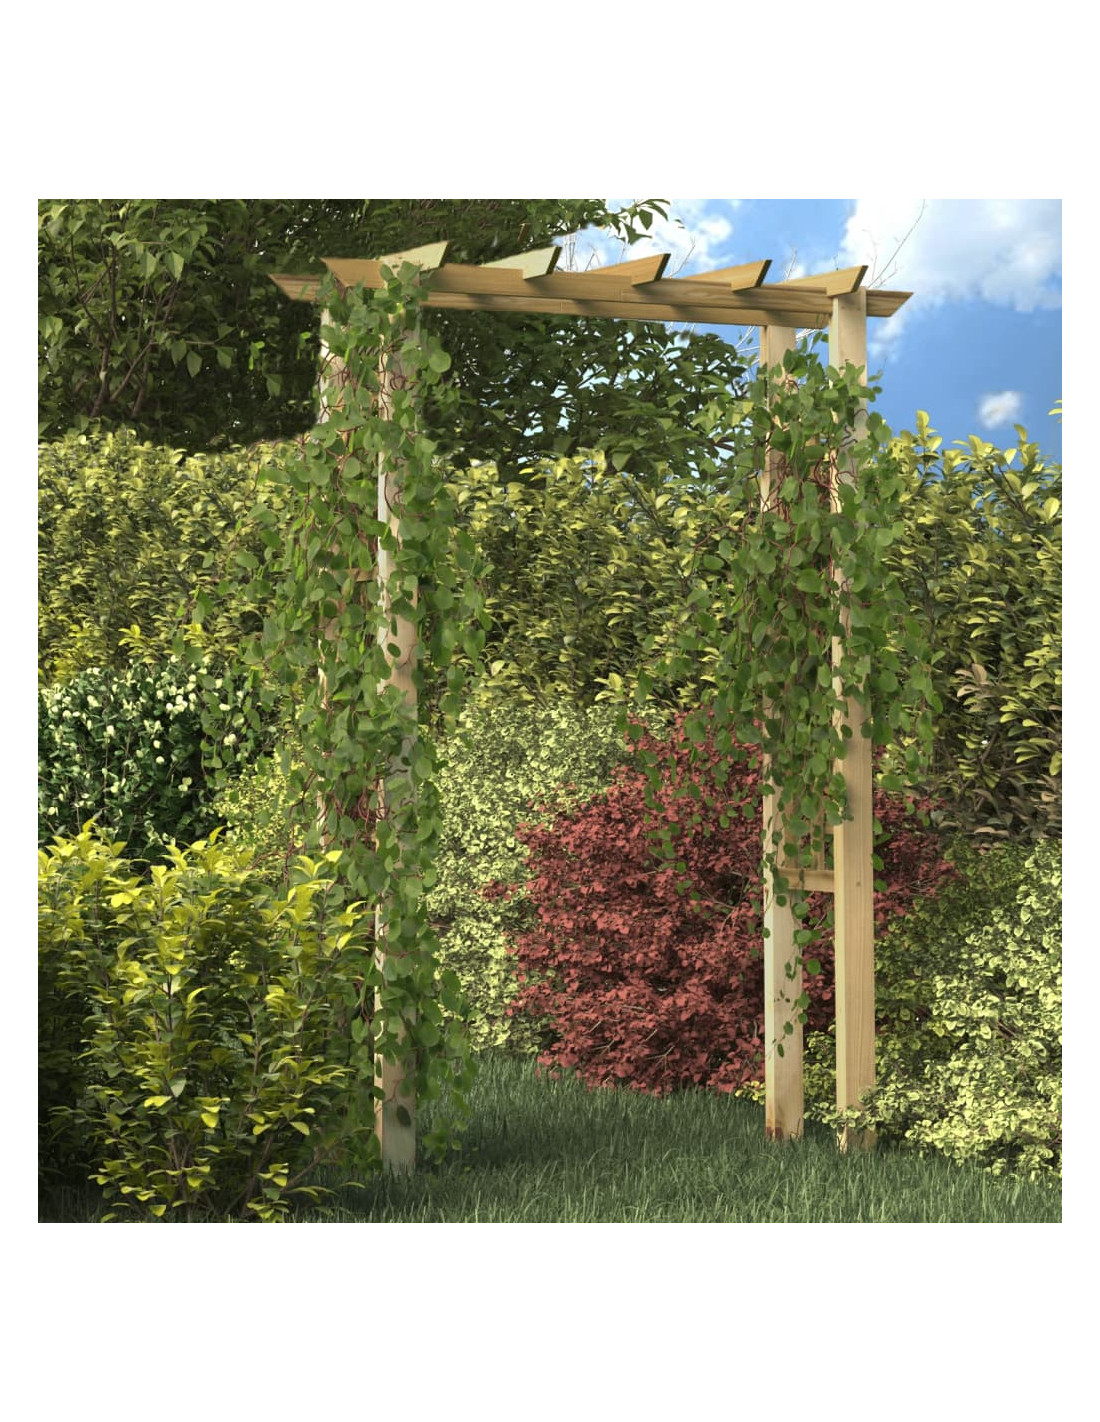 Arche de jardin en bois de pin massif Arceau jardin XXL - Ciel & terre